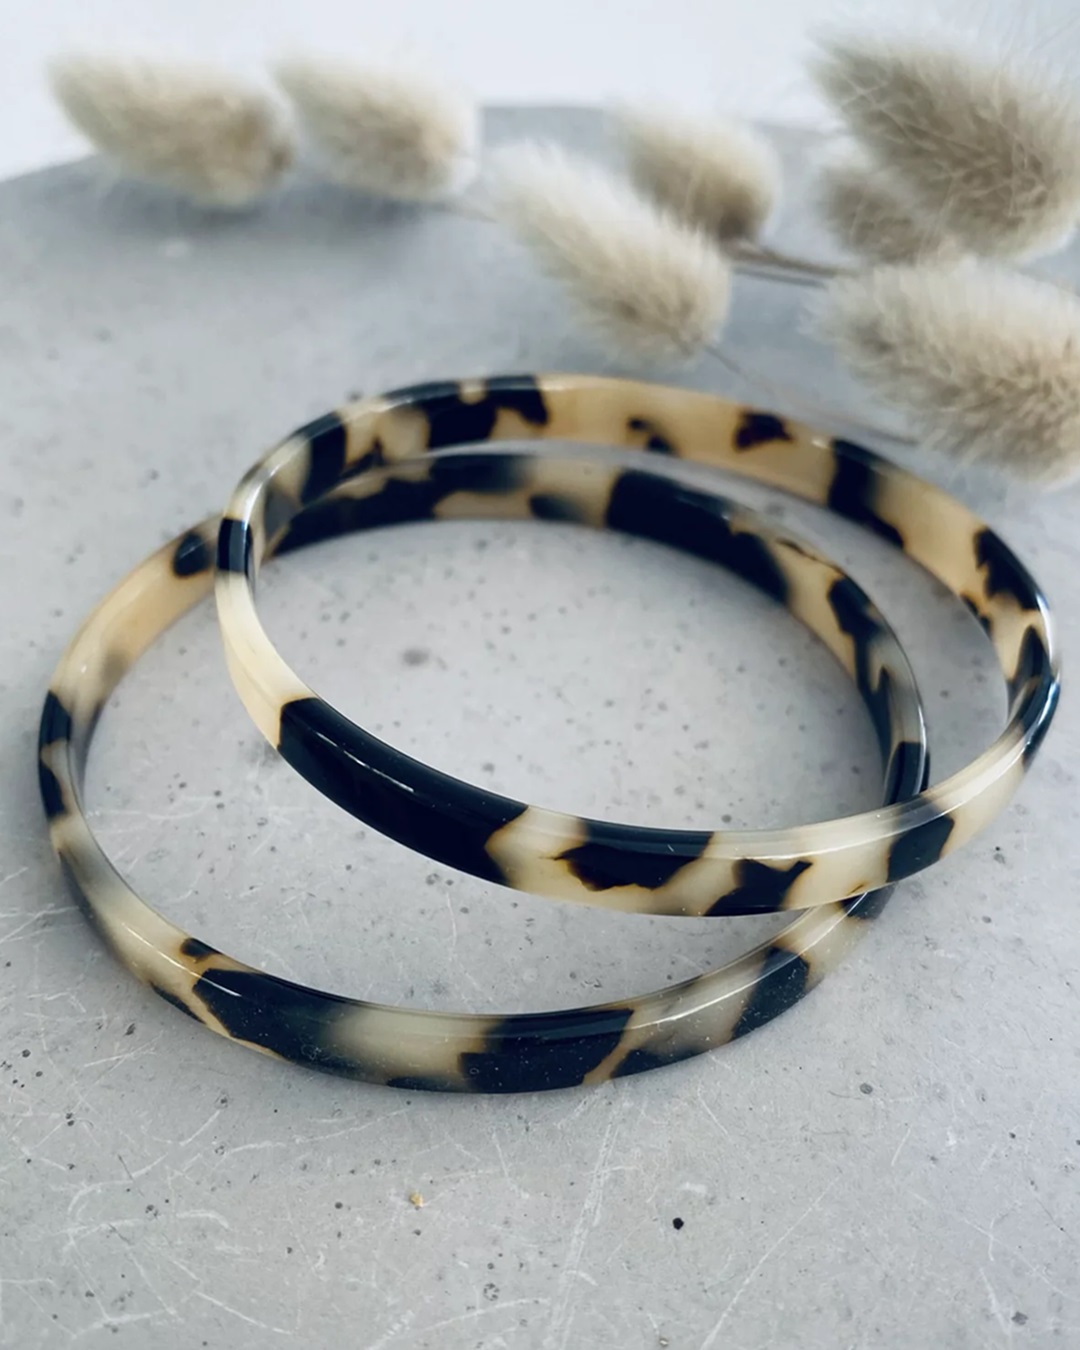 Tortoiseshell bracelets